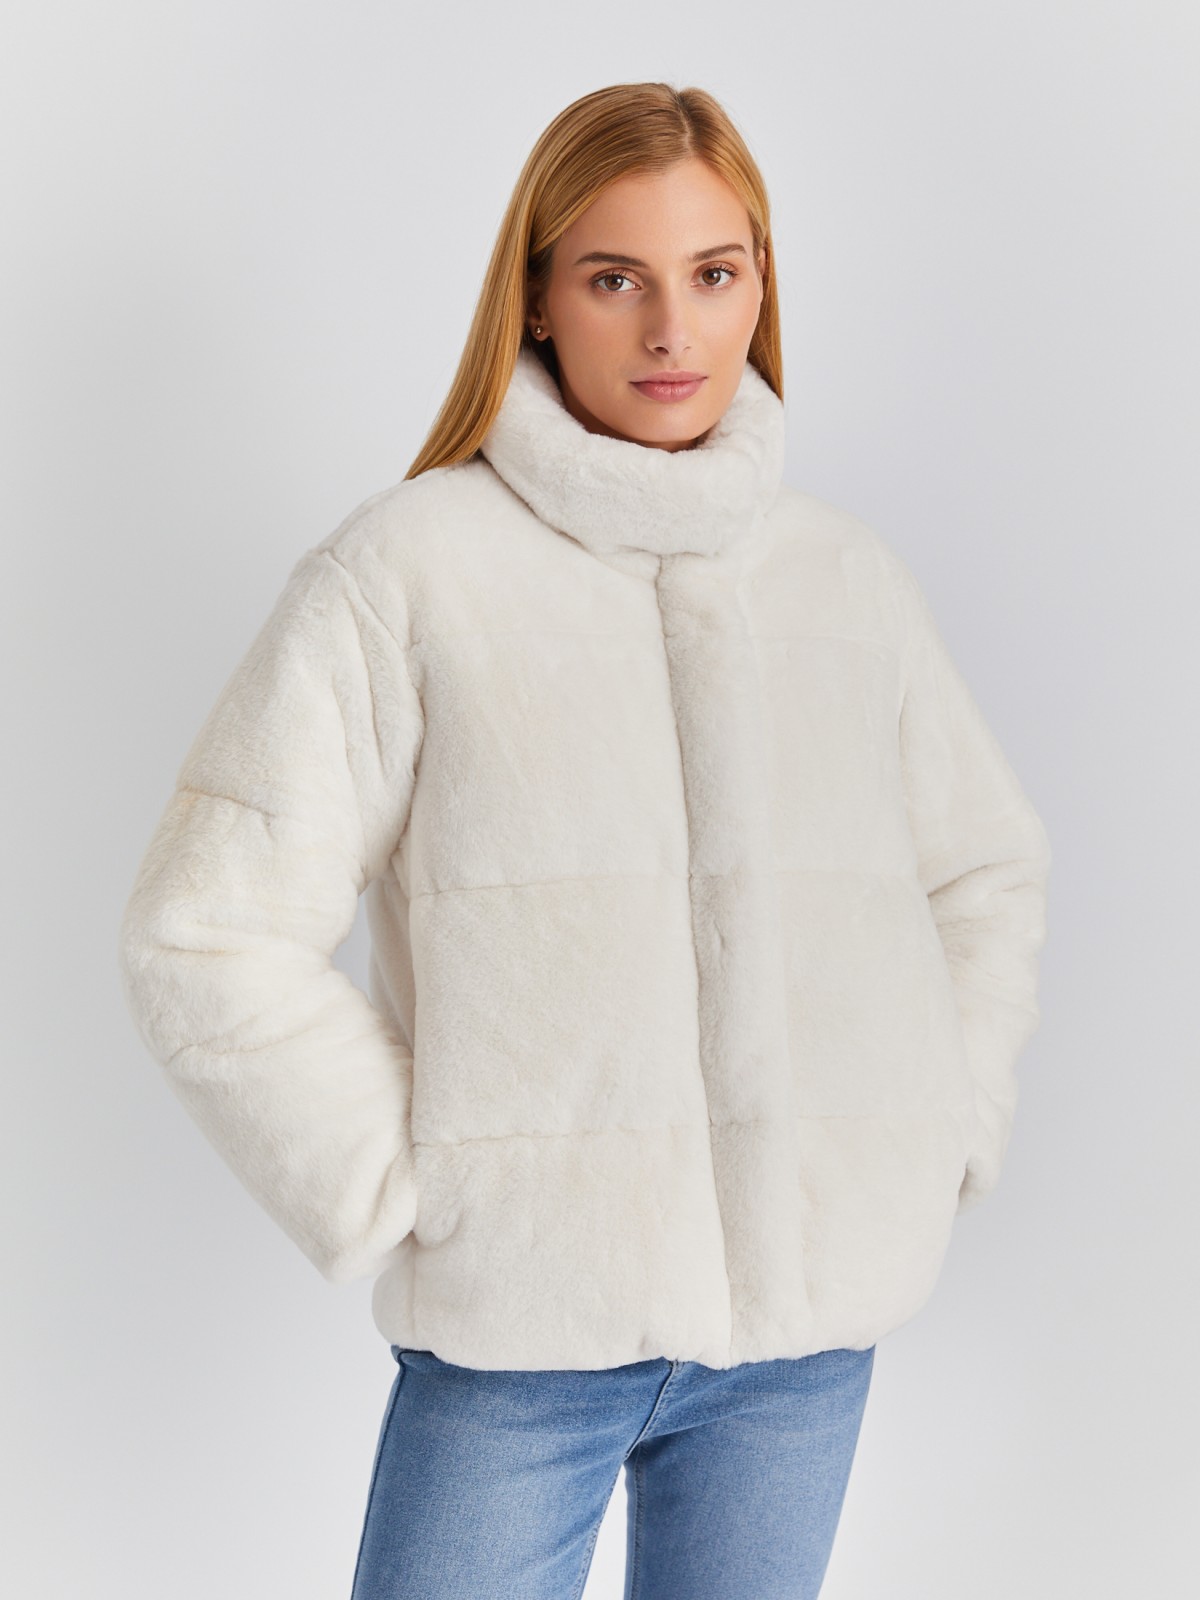 Короткая тёплая куртка-шуба из экомеха с утеплителем zolla 023345550014, цвет молоко, размер XS - фото 3